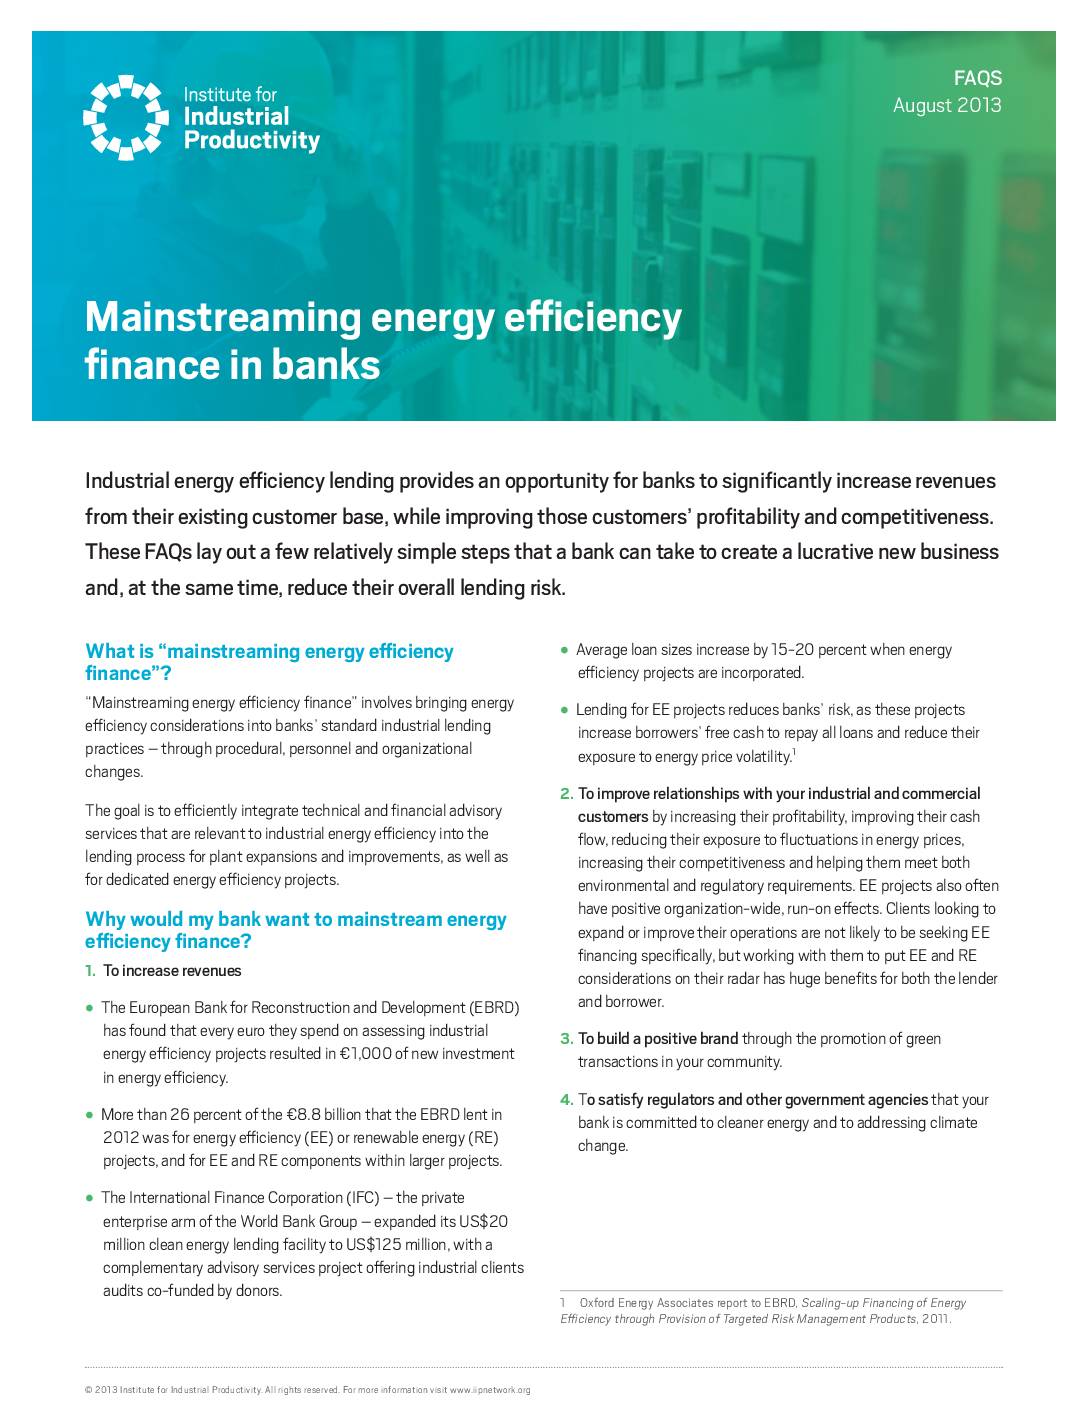 Mainstreaming energy efficiency finance in banks – FAQ